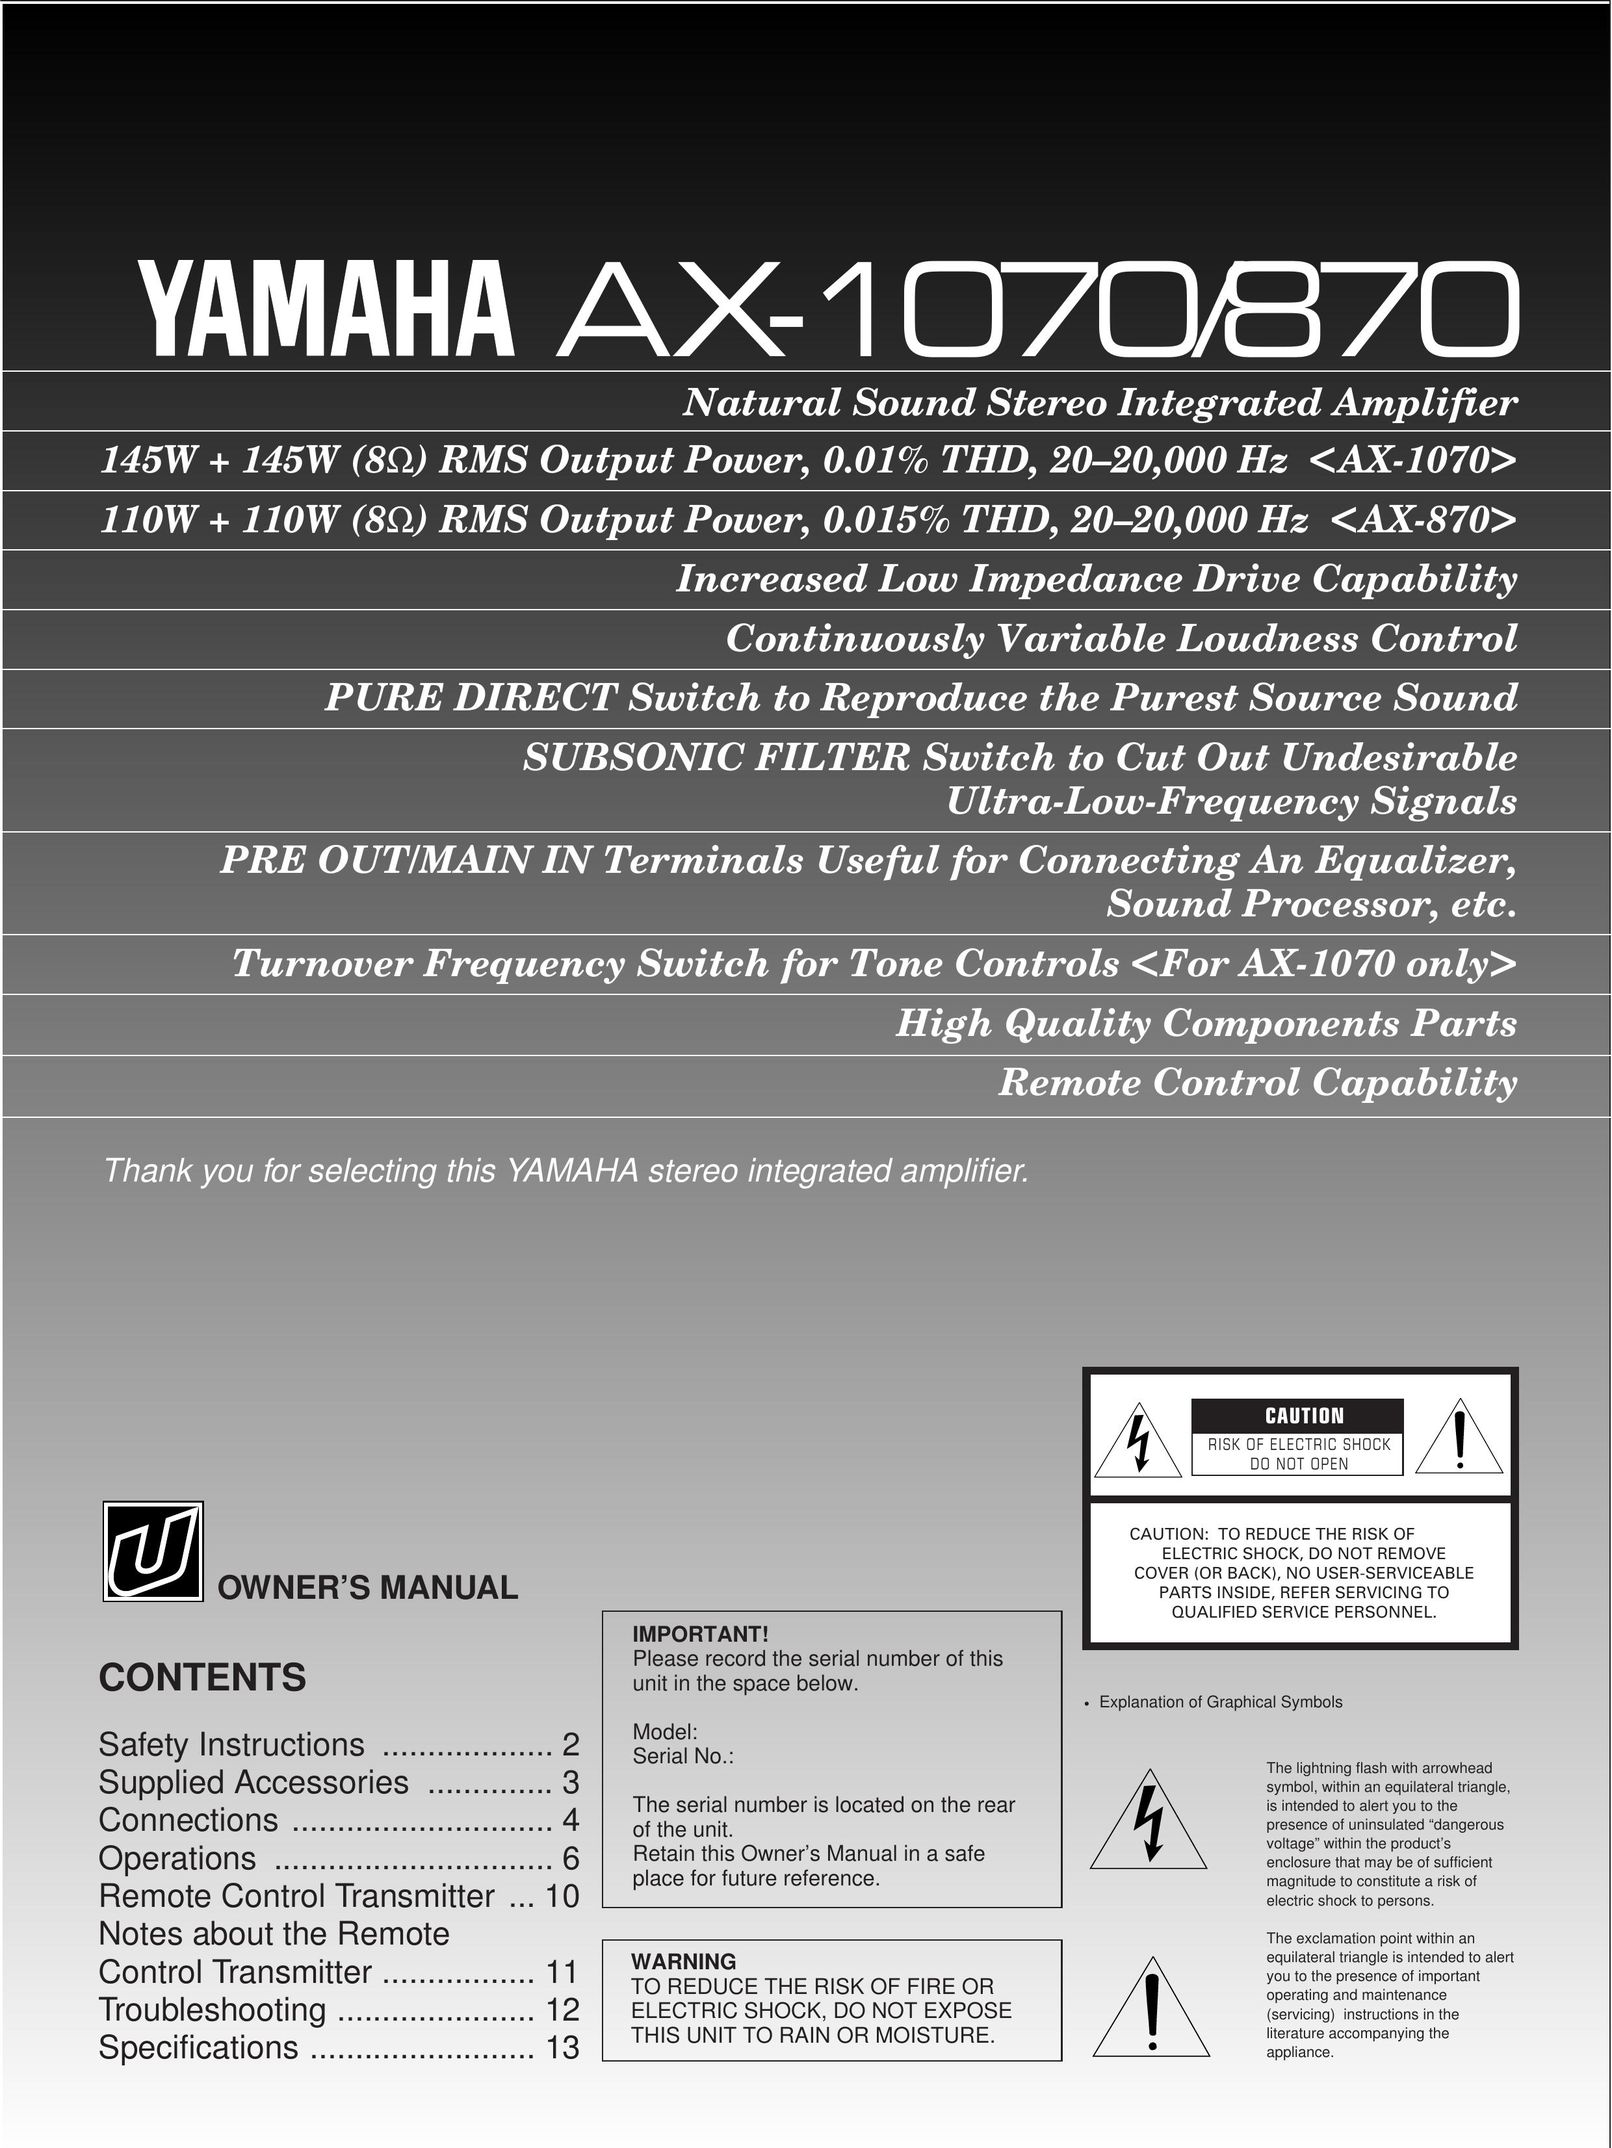 Yamaha AX-1070 Stereo Amplifier User Manual